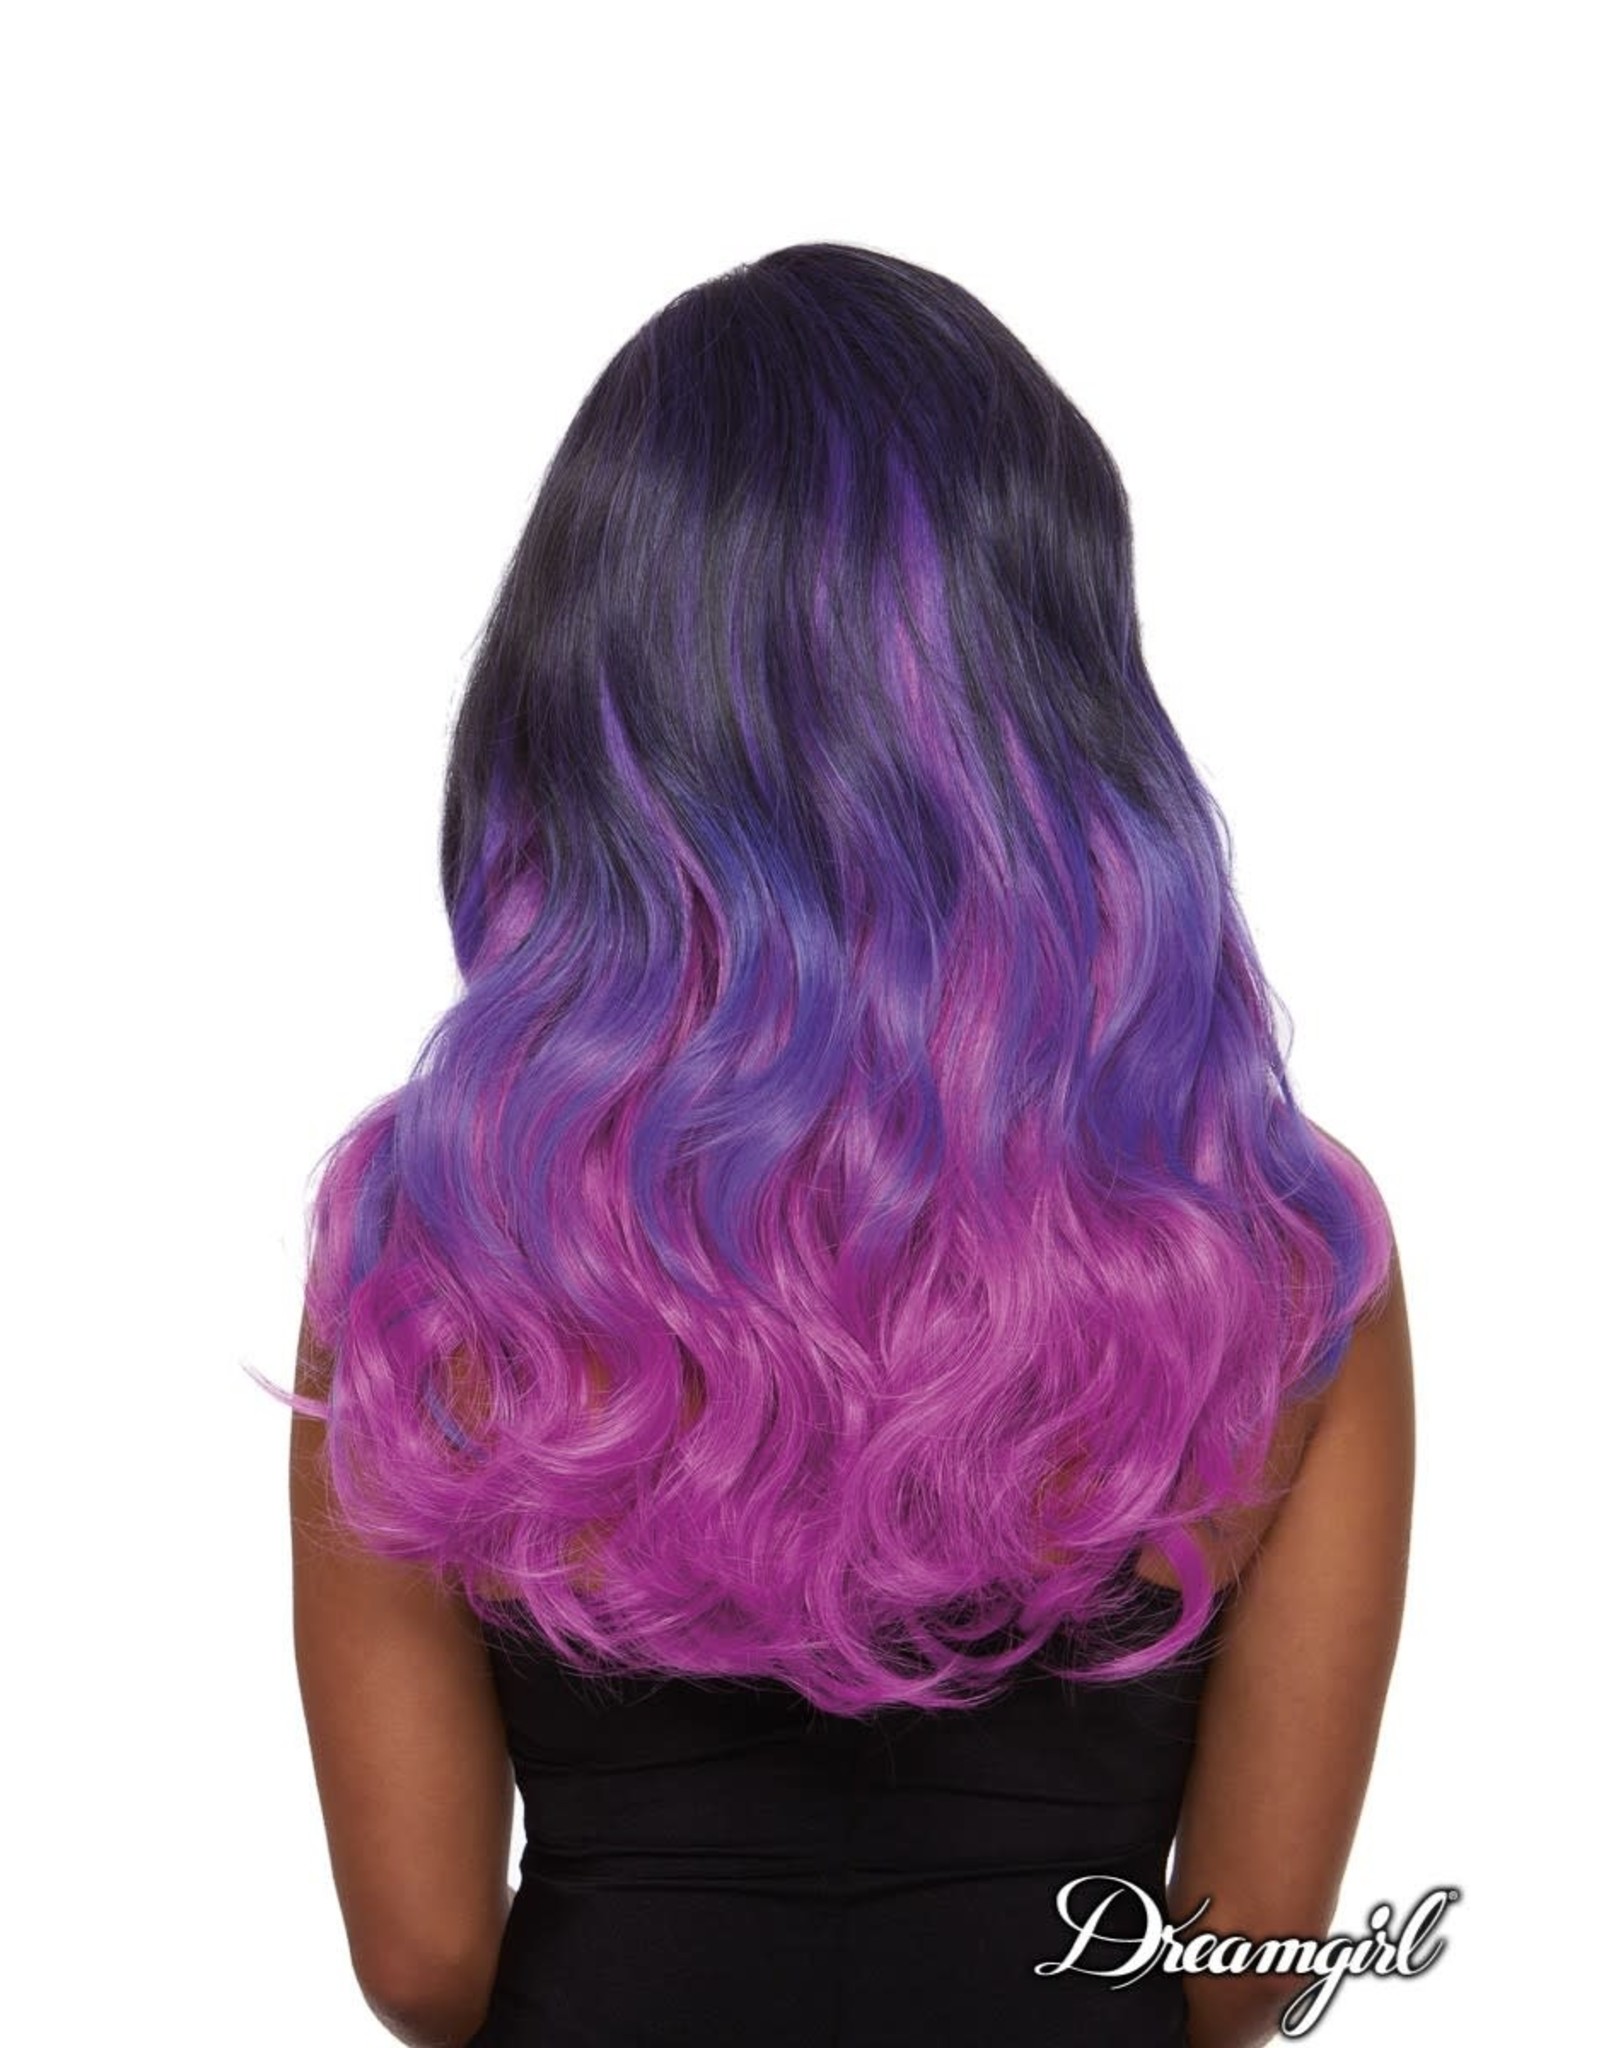 Dreamgirl Dreamgirl Wigs - Faux Ombre Layered Wavy (3-tone purple)